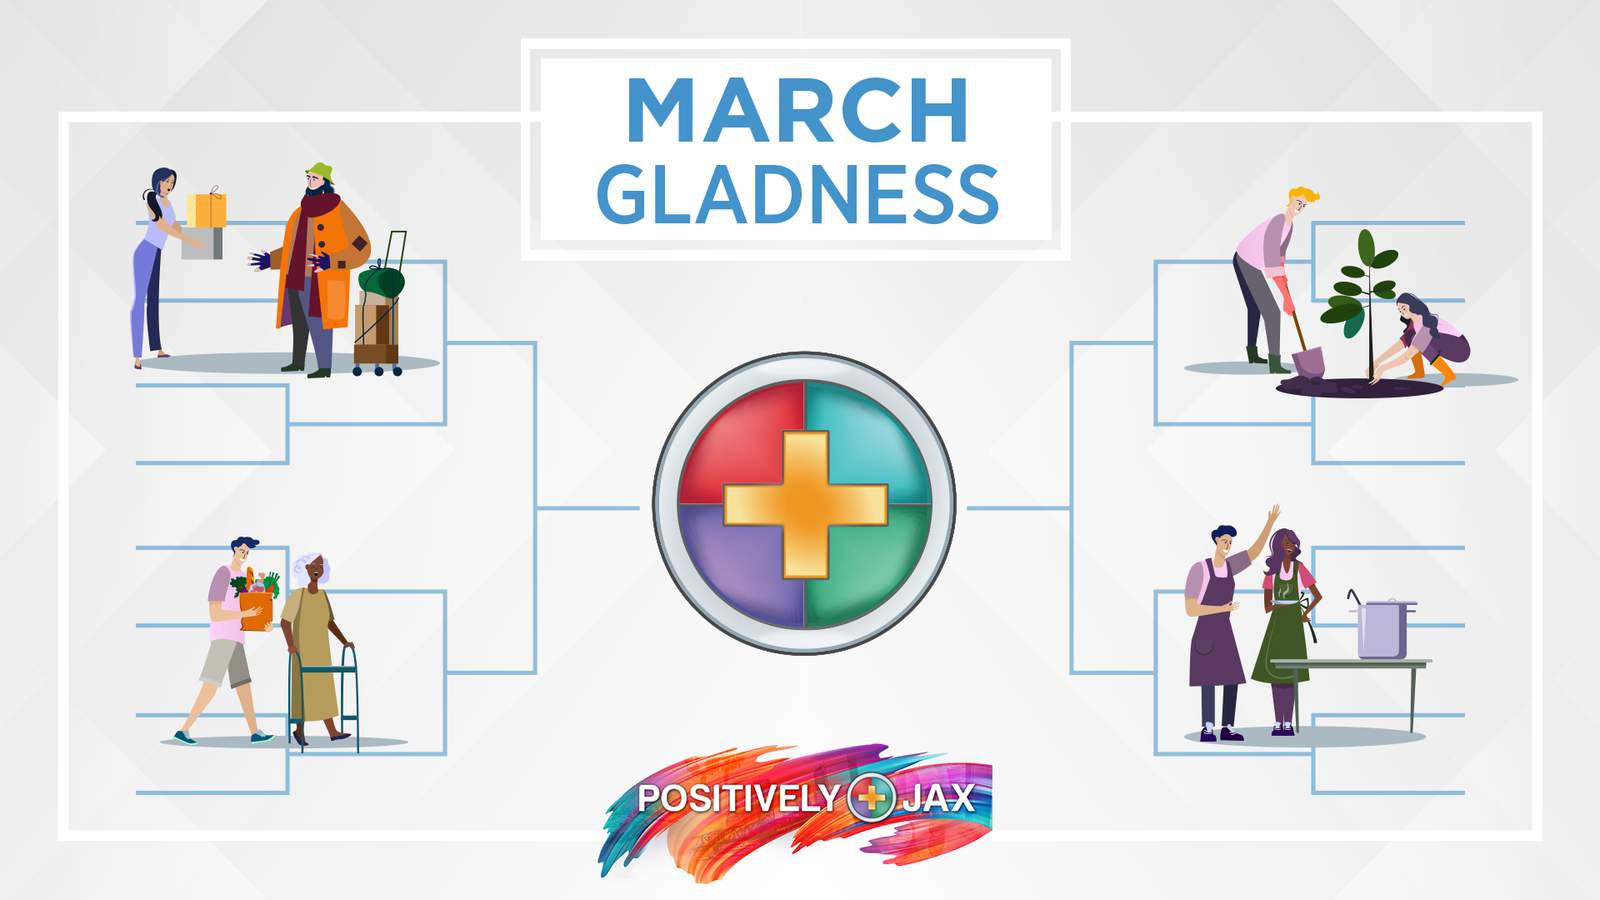 List: Positively Jax March Gladness MOSH ticket winners